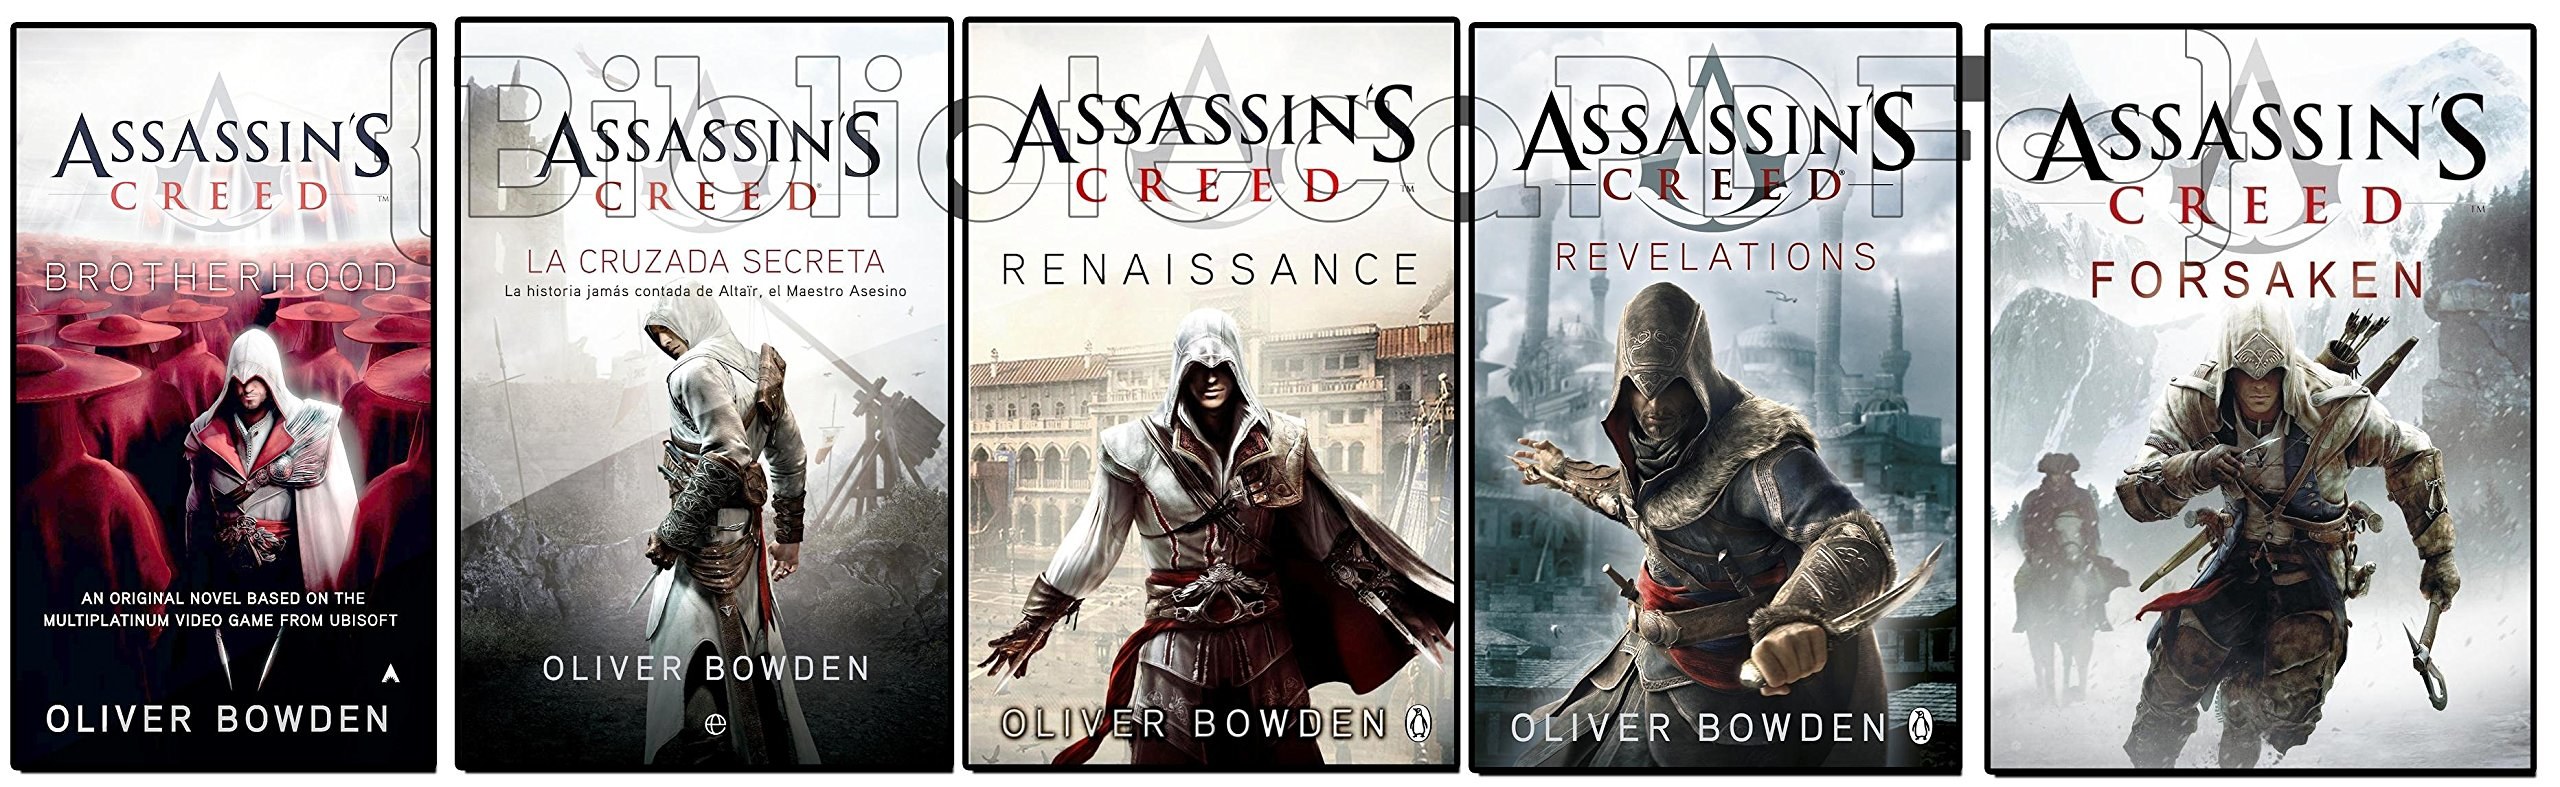 Assassins creed все части список. Антология ассасин Крид по порядку. Assassins Creed части по порядку. Ассасин Крид части по порядку. Версии ассасина по порядку.